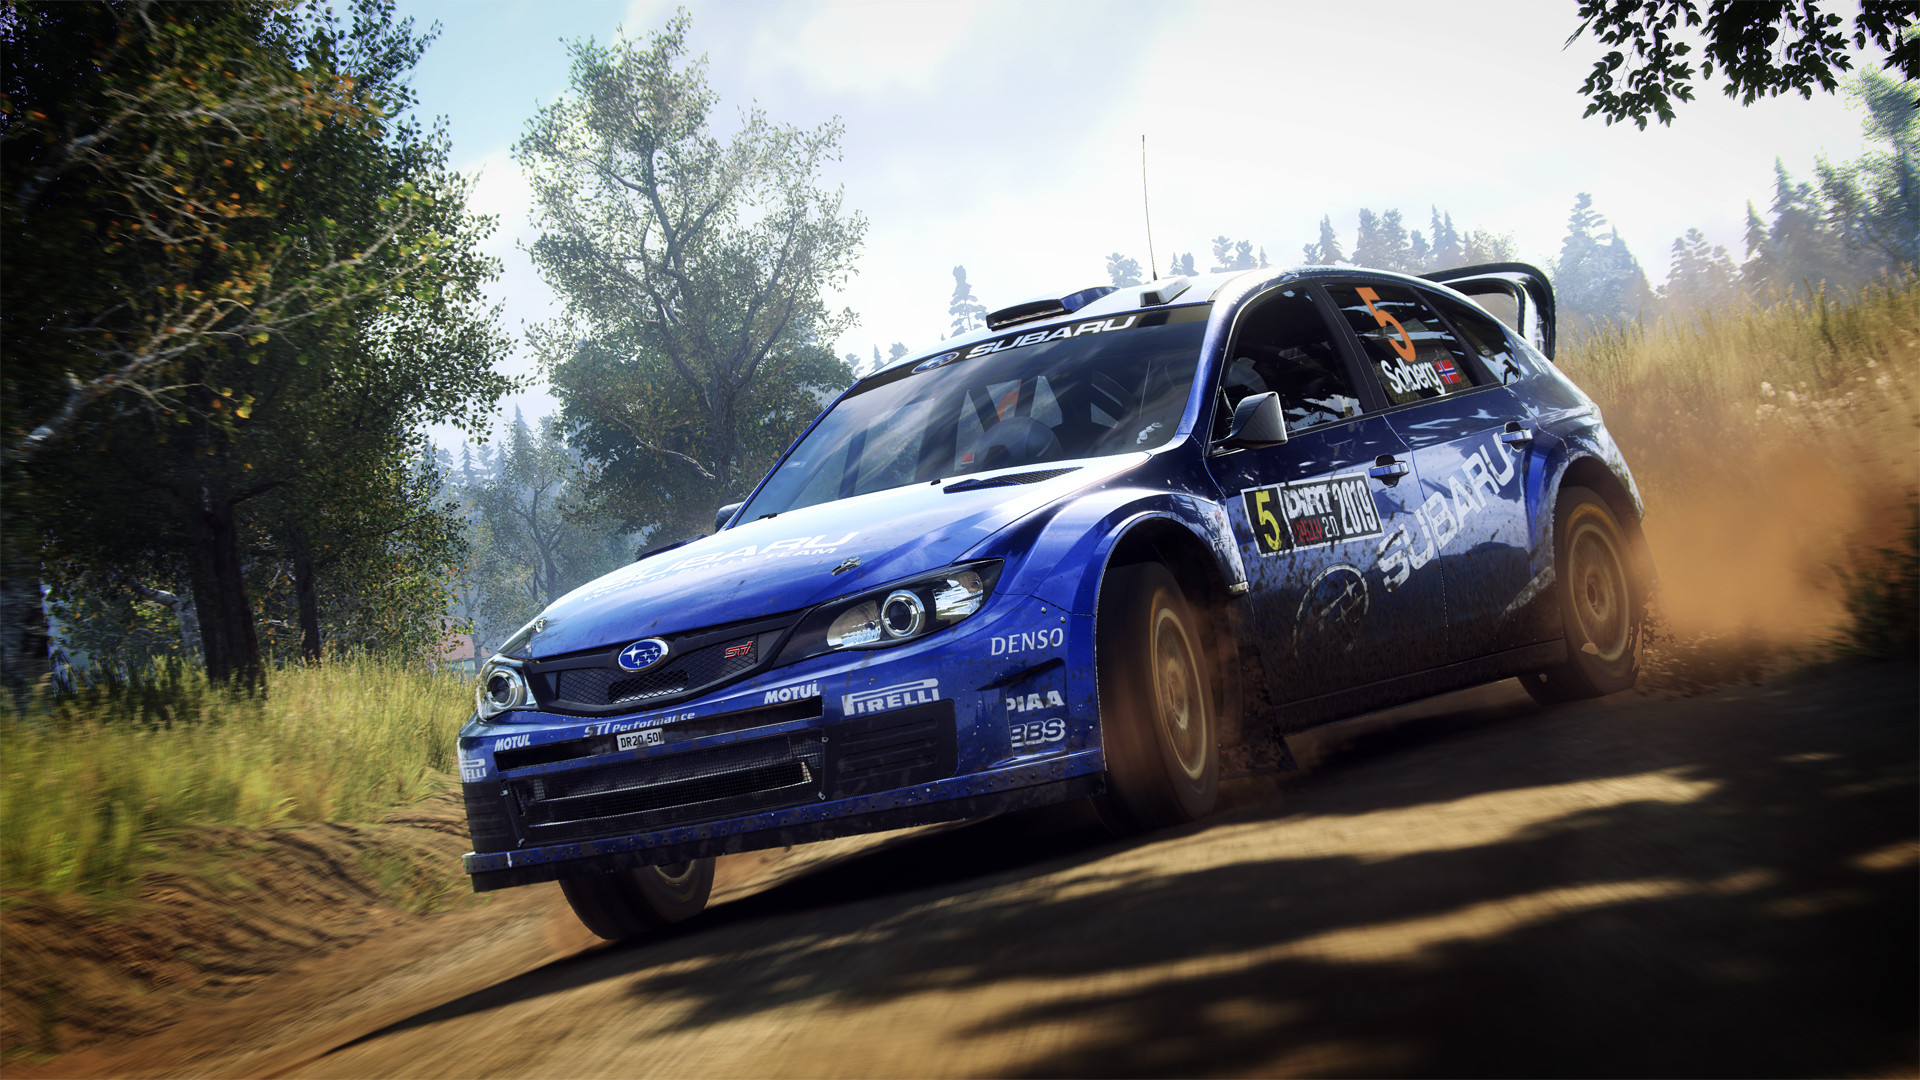 DiRT Rally 2.0 on Steam